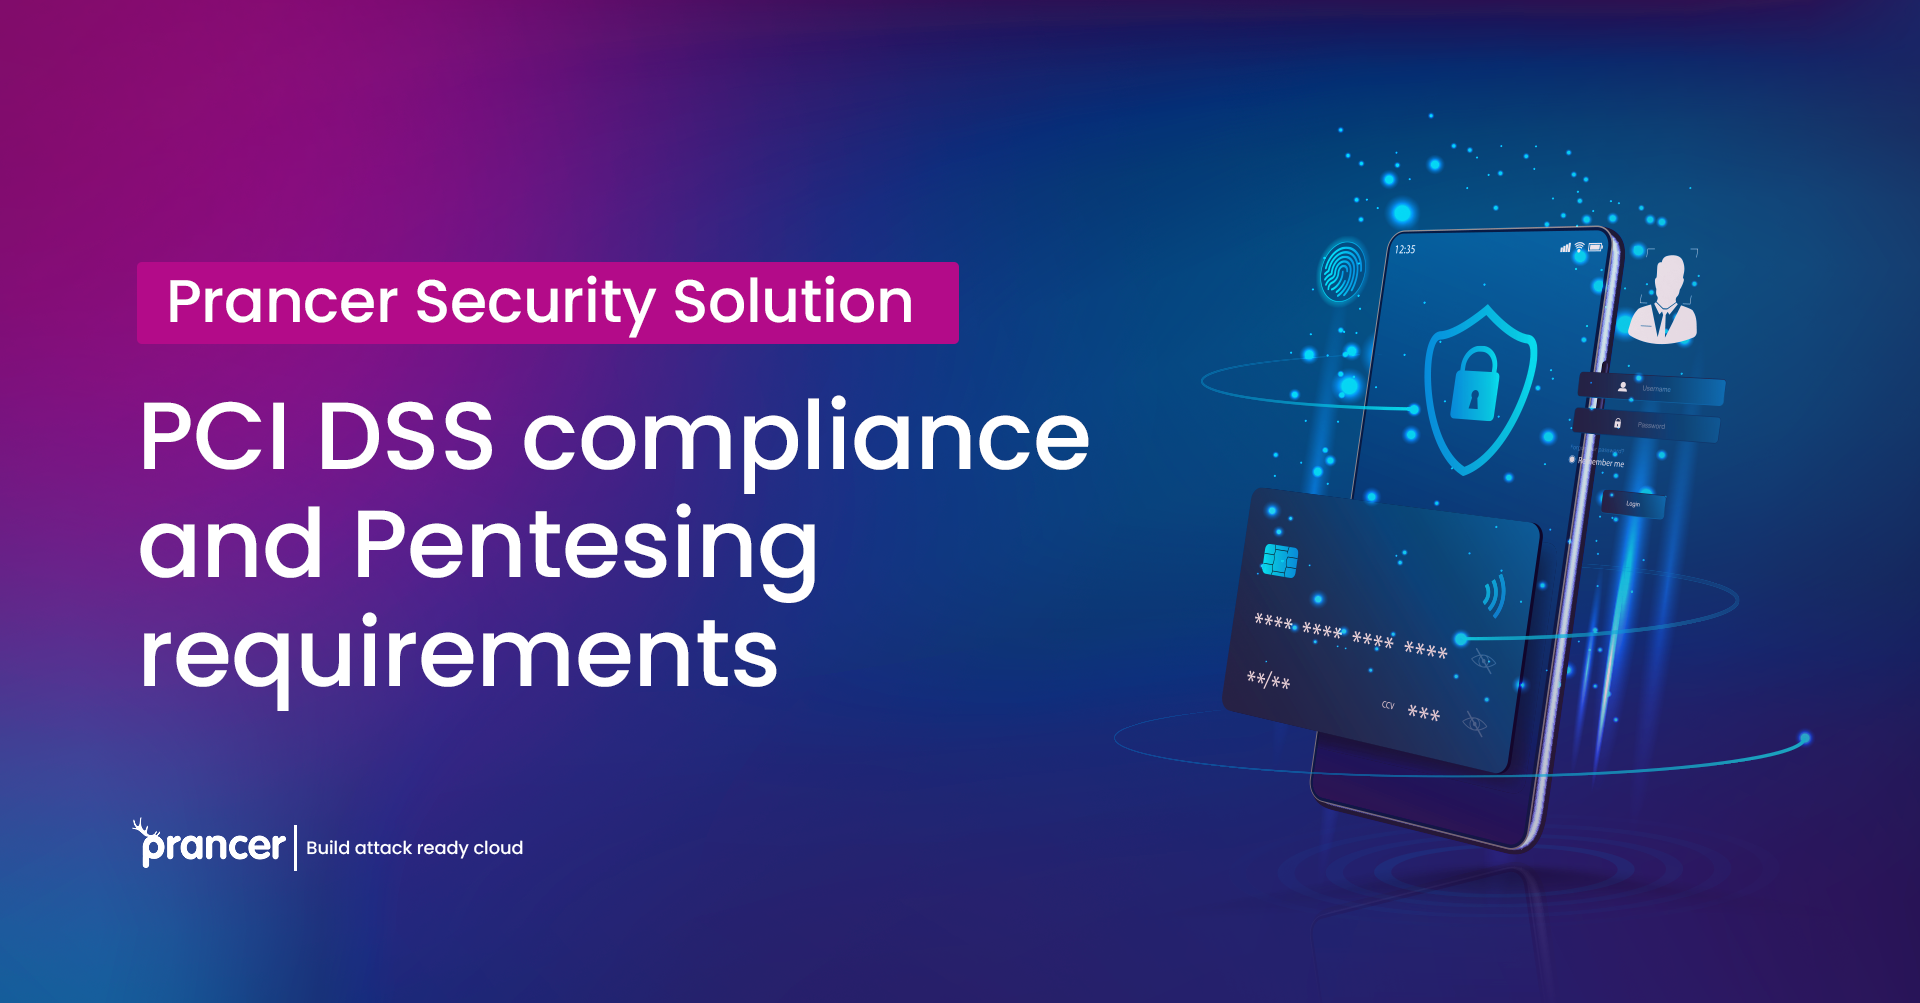 PCI DSS Compliance and Penetration Testing Requirements - Prancer Cloud Security Platform